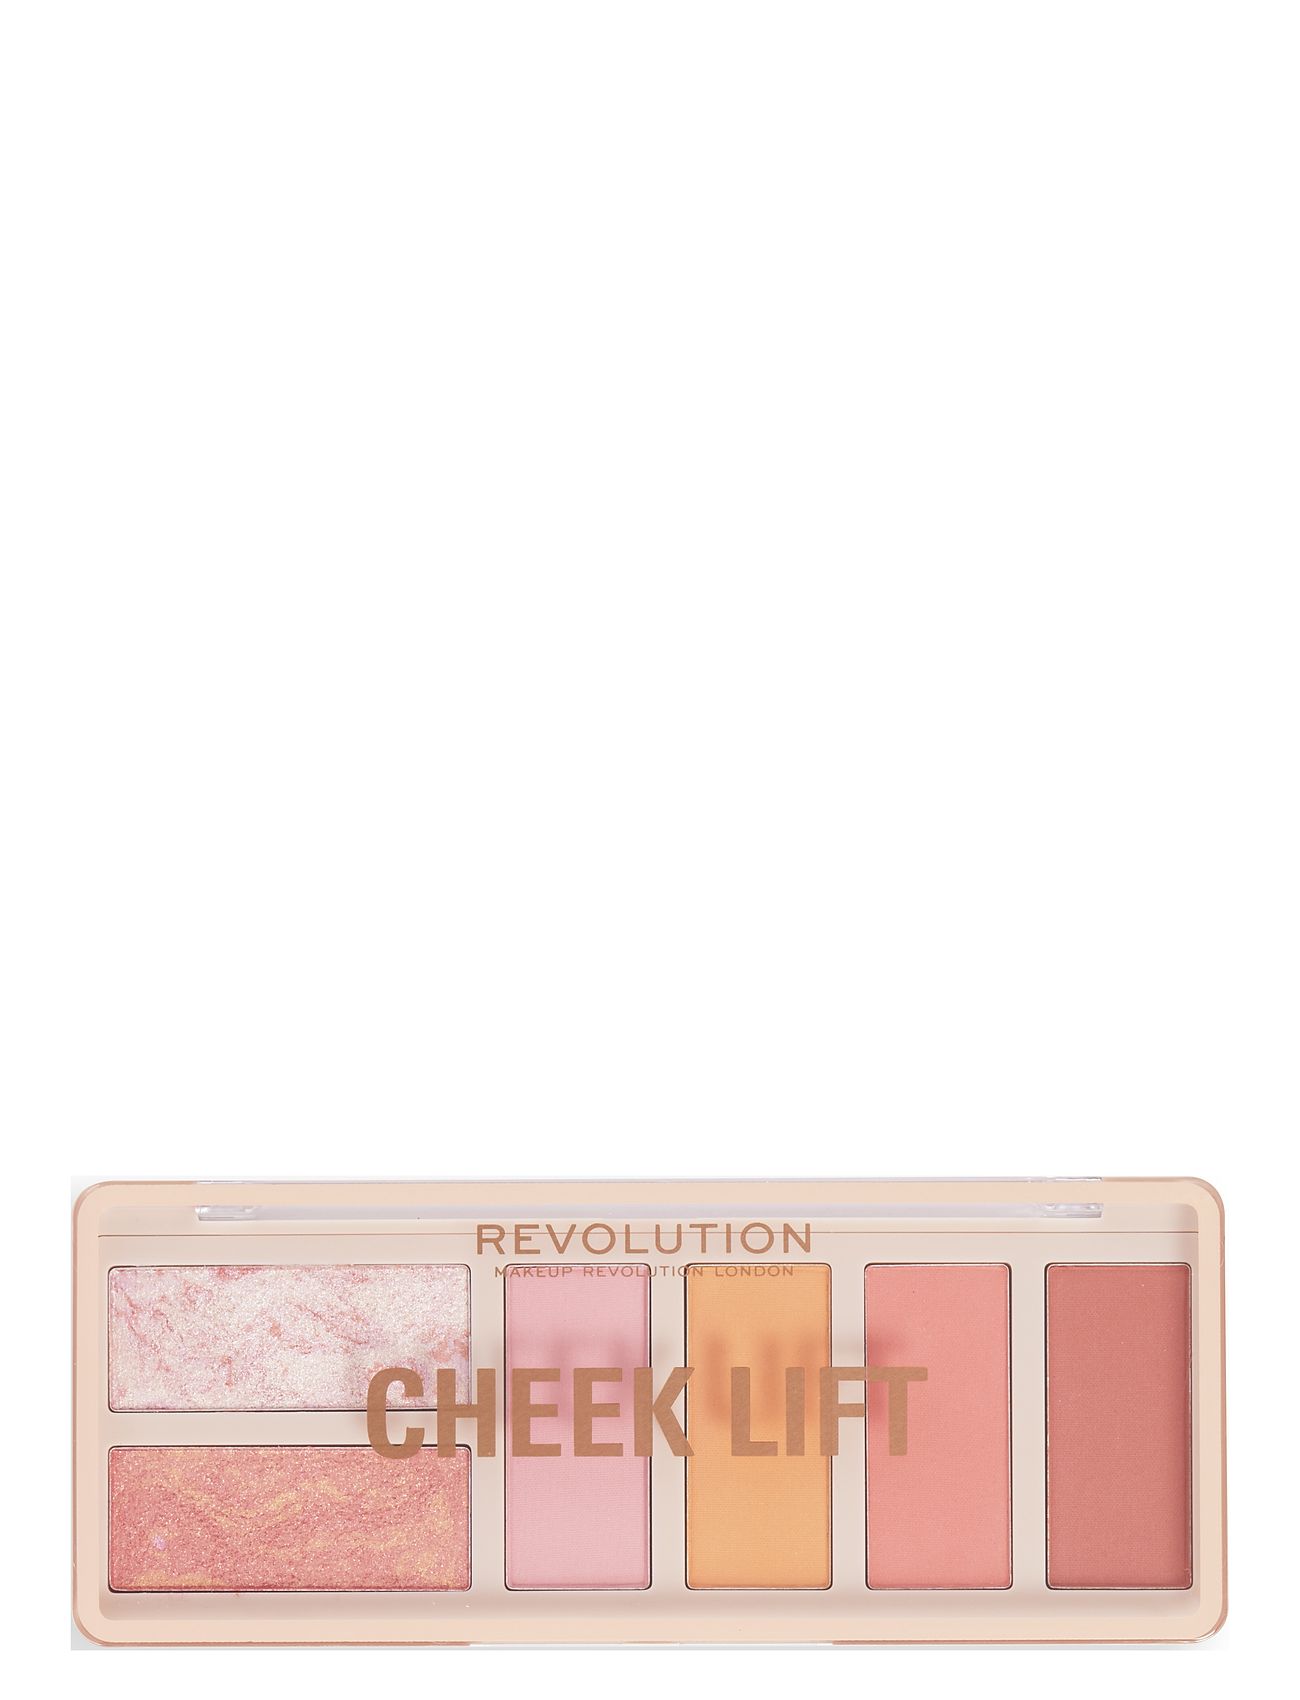 Revolution Blush Lift Palette Pink Energy Ögonskugga Palette Smink Multi/patterned Makeup Revolution